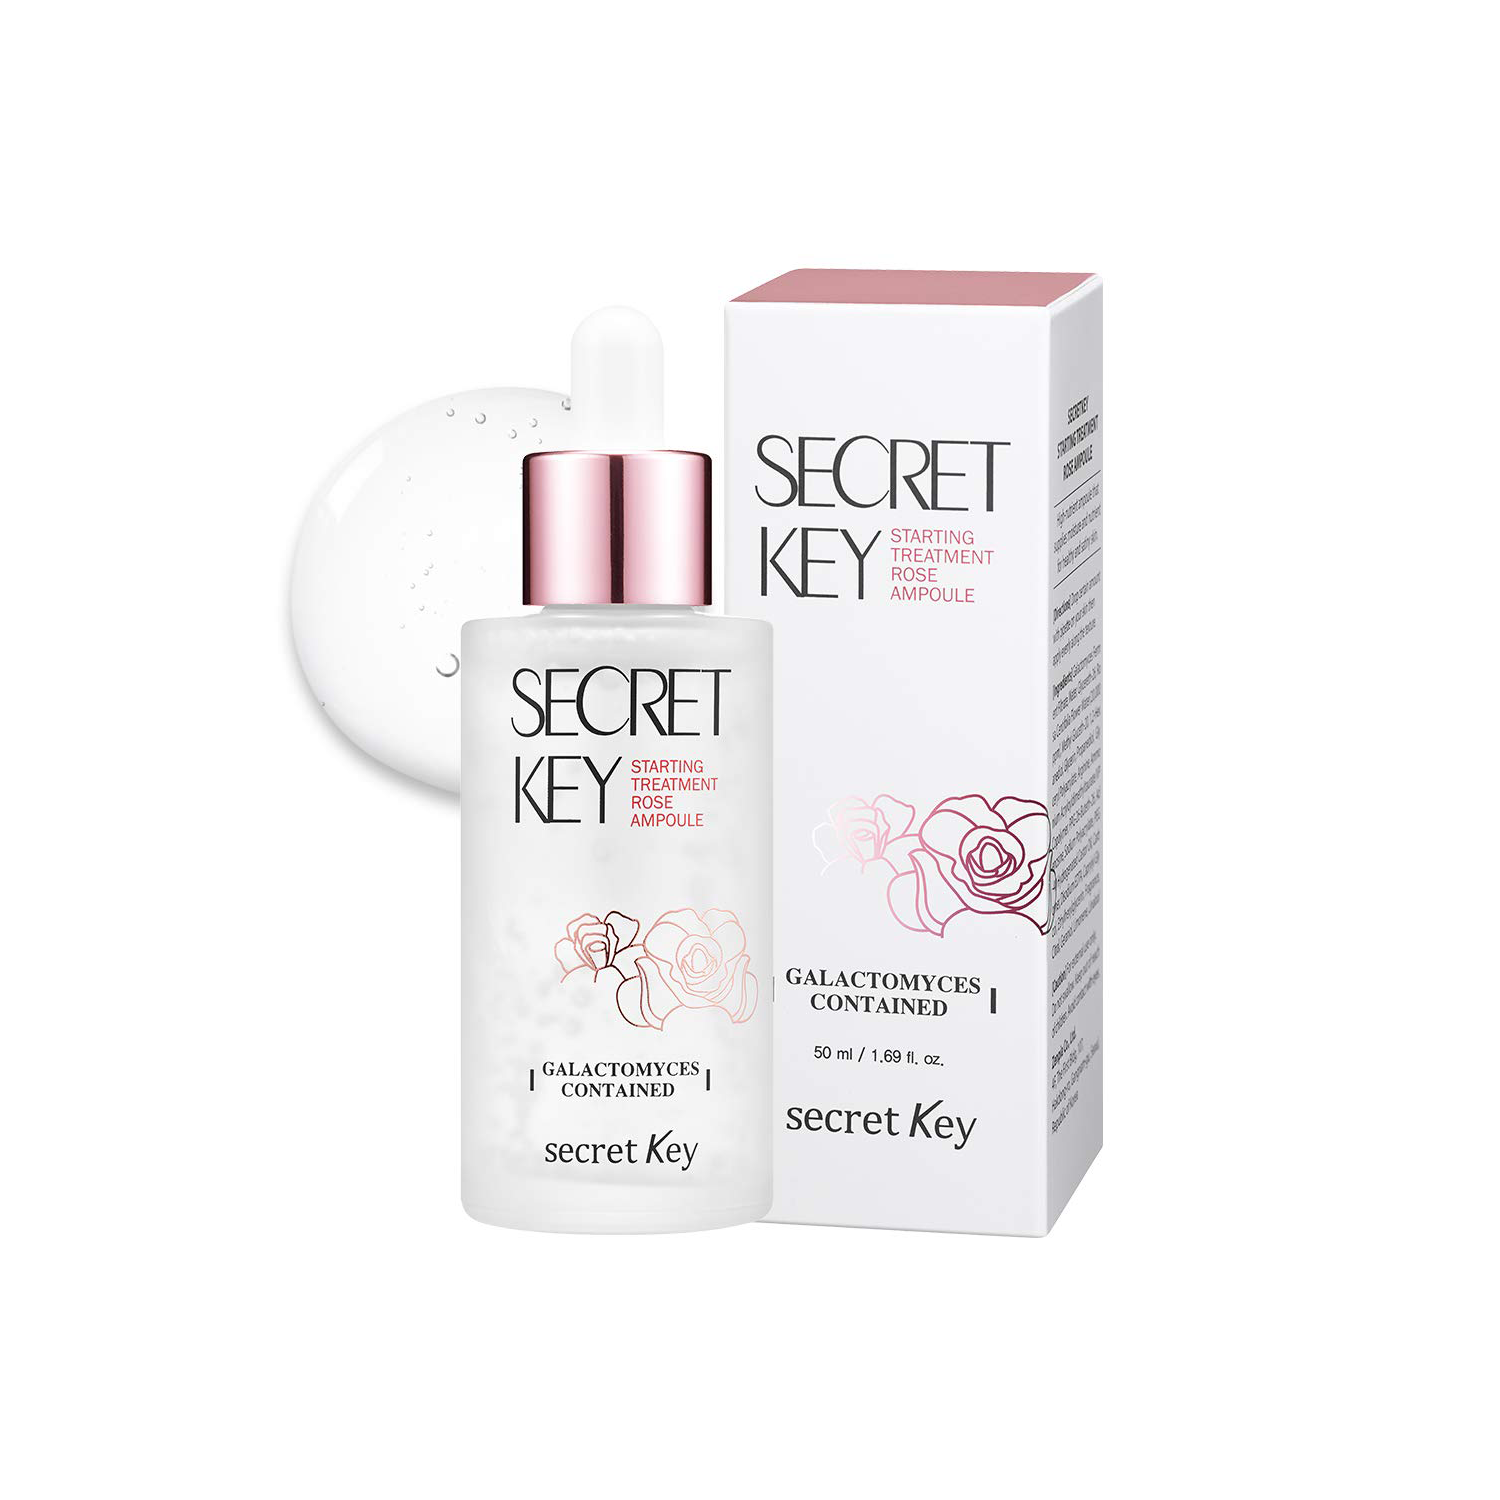 Secret Key Starting Treatment Rose Ampoule 50ml - DODOSKIN